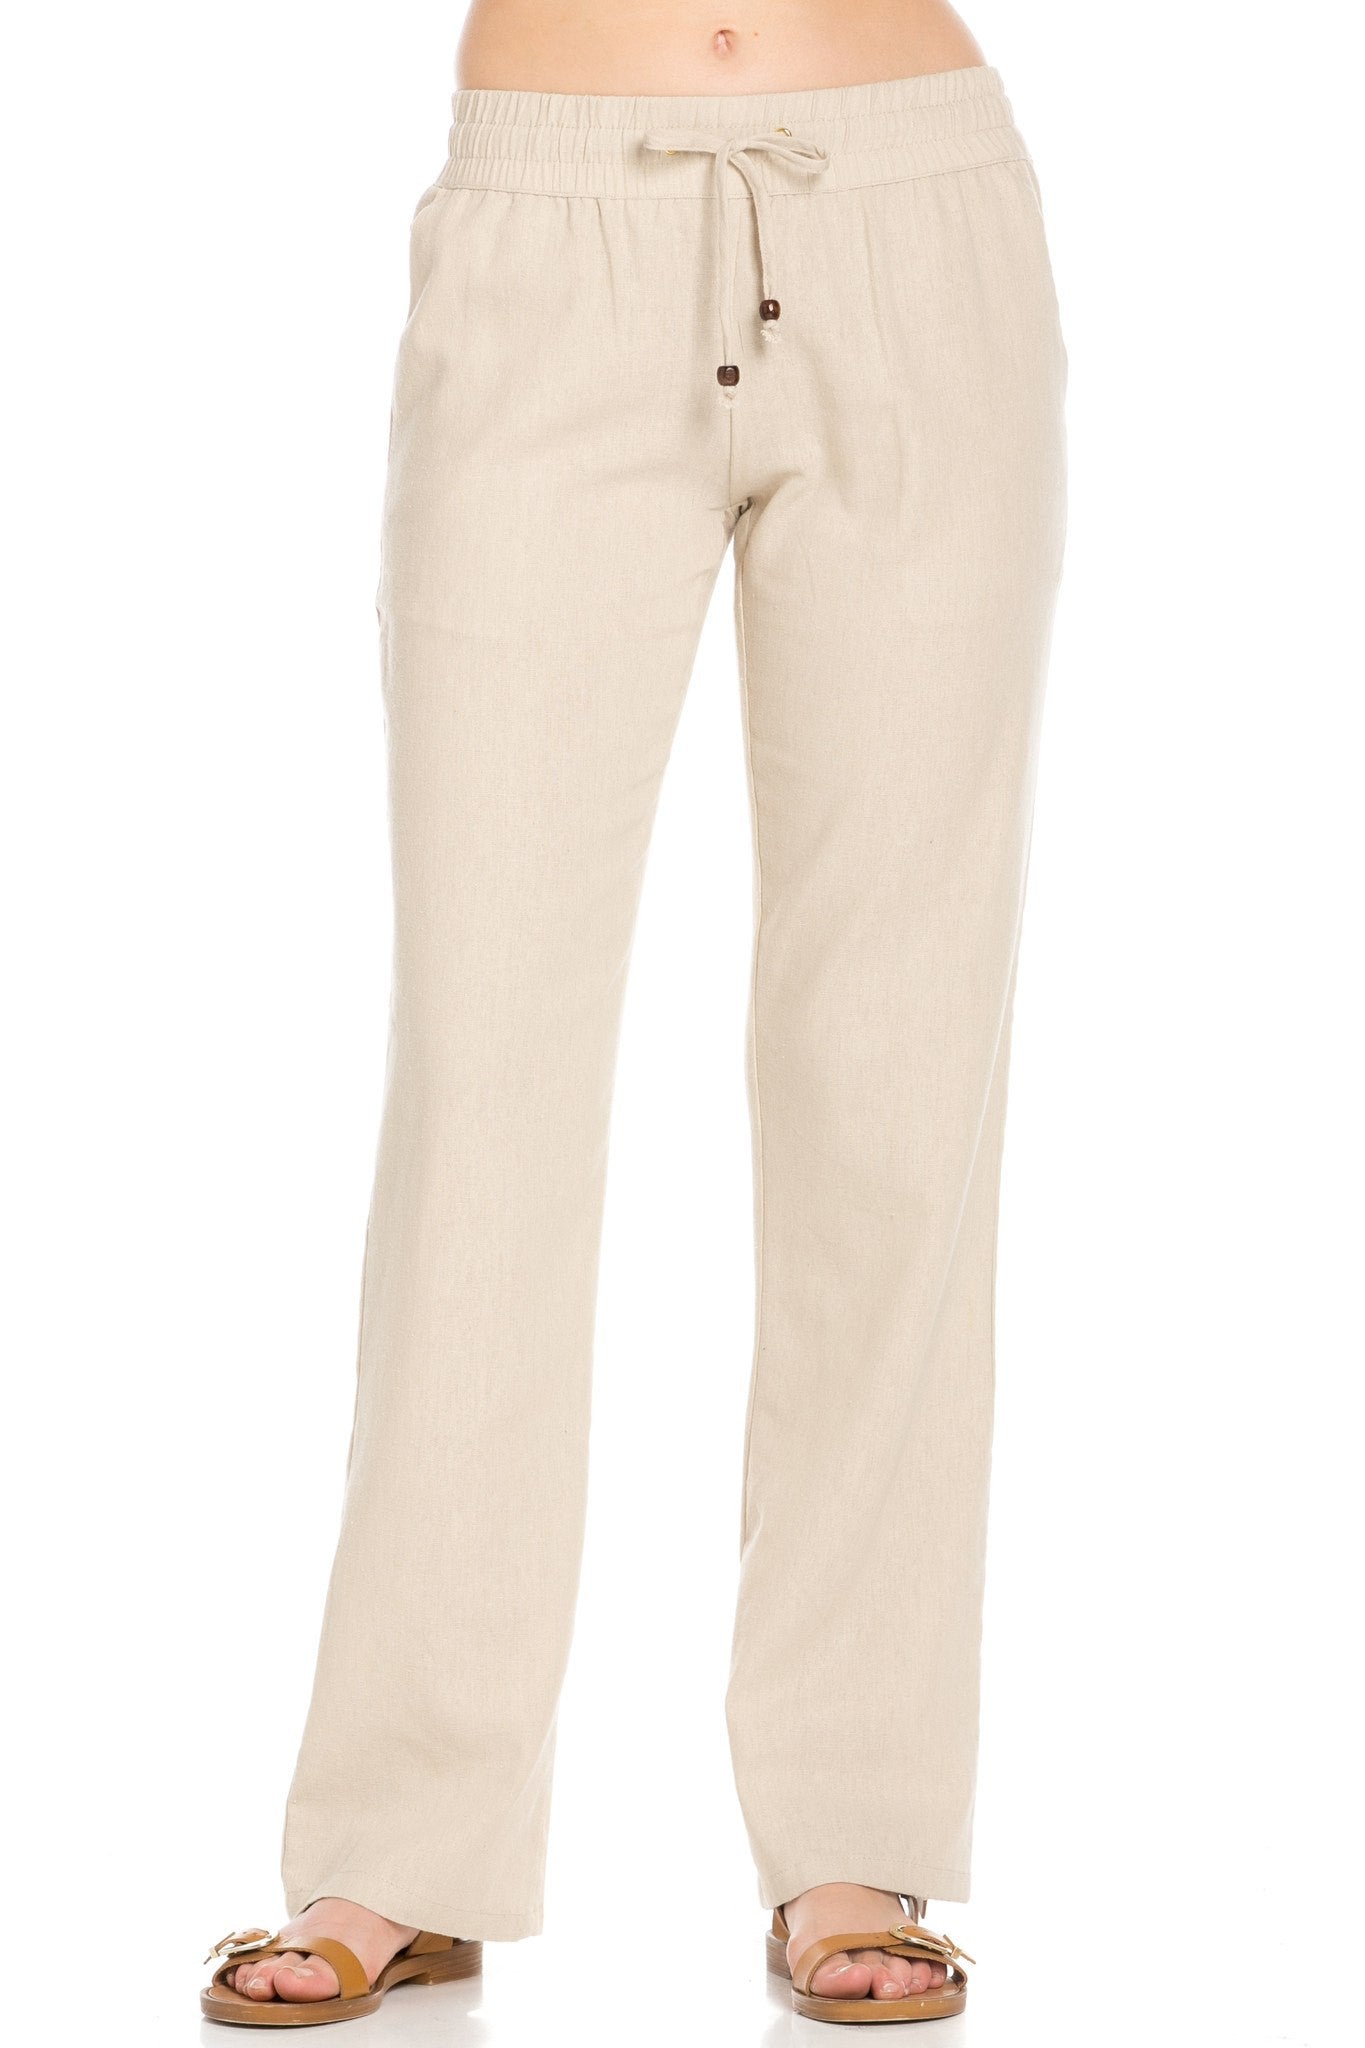 Womens Premium Soft Linen Pants Relaxed Fit Comfort Wear Boho